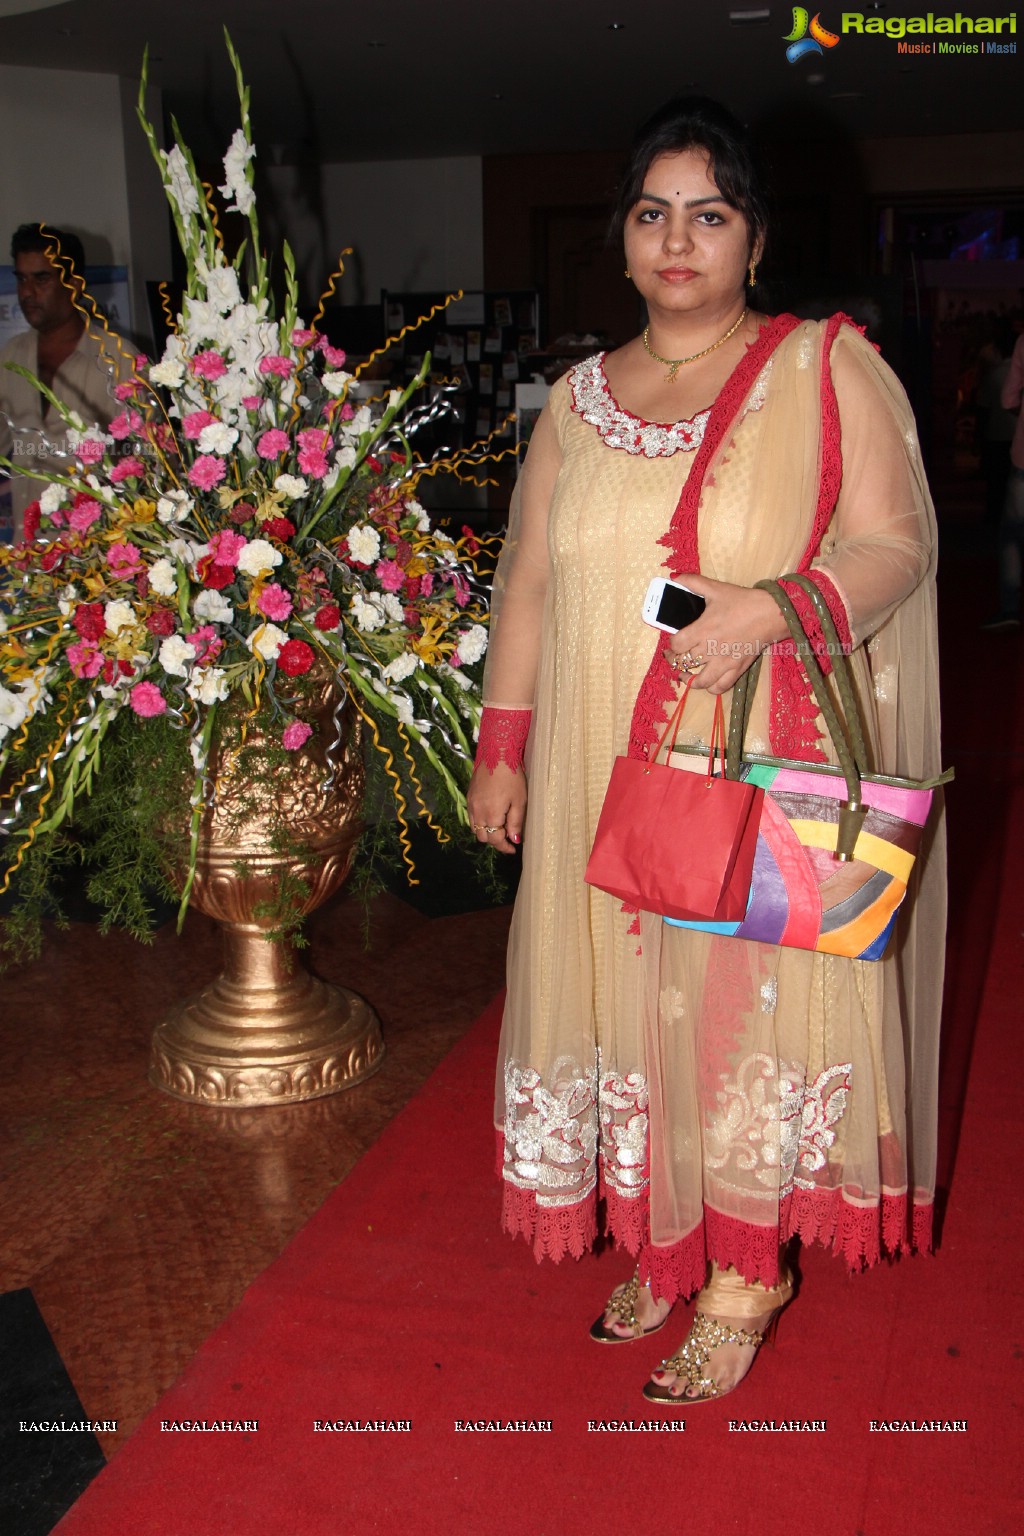 The Big Fat Wedding Fair 2013 at Marriott, Hyderabad